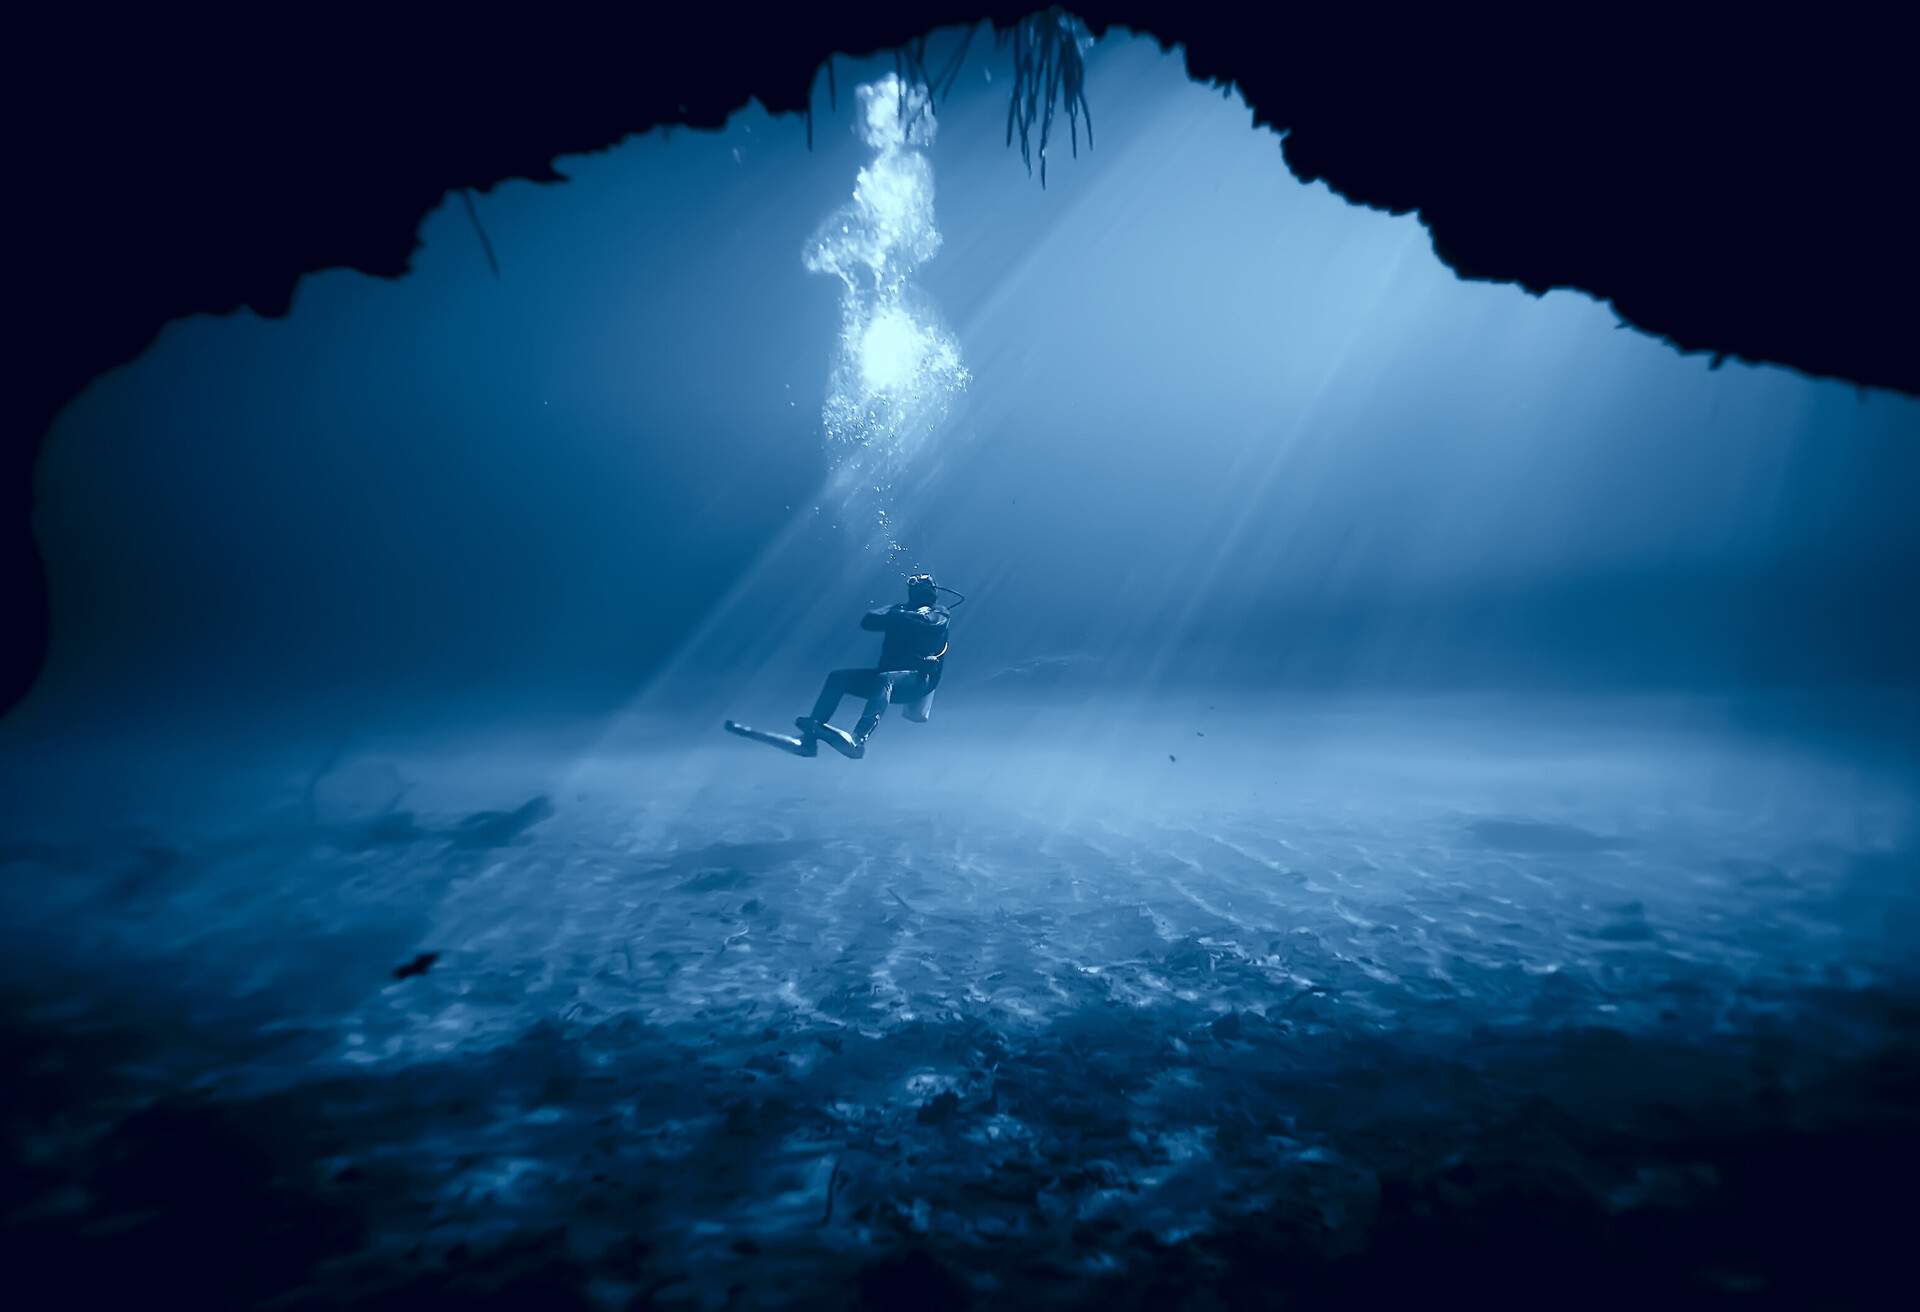 underwater world cave of yucatan cenote, dark landscape of stalactites underground, diver; Shutterstock ID 1715896810; purchase_order: ; job: KAYAK; client: ; other: